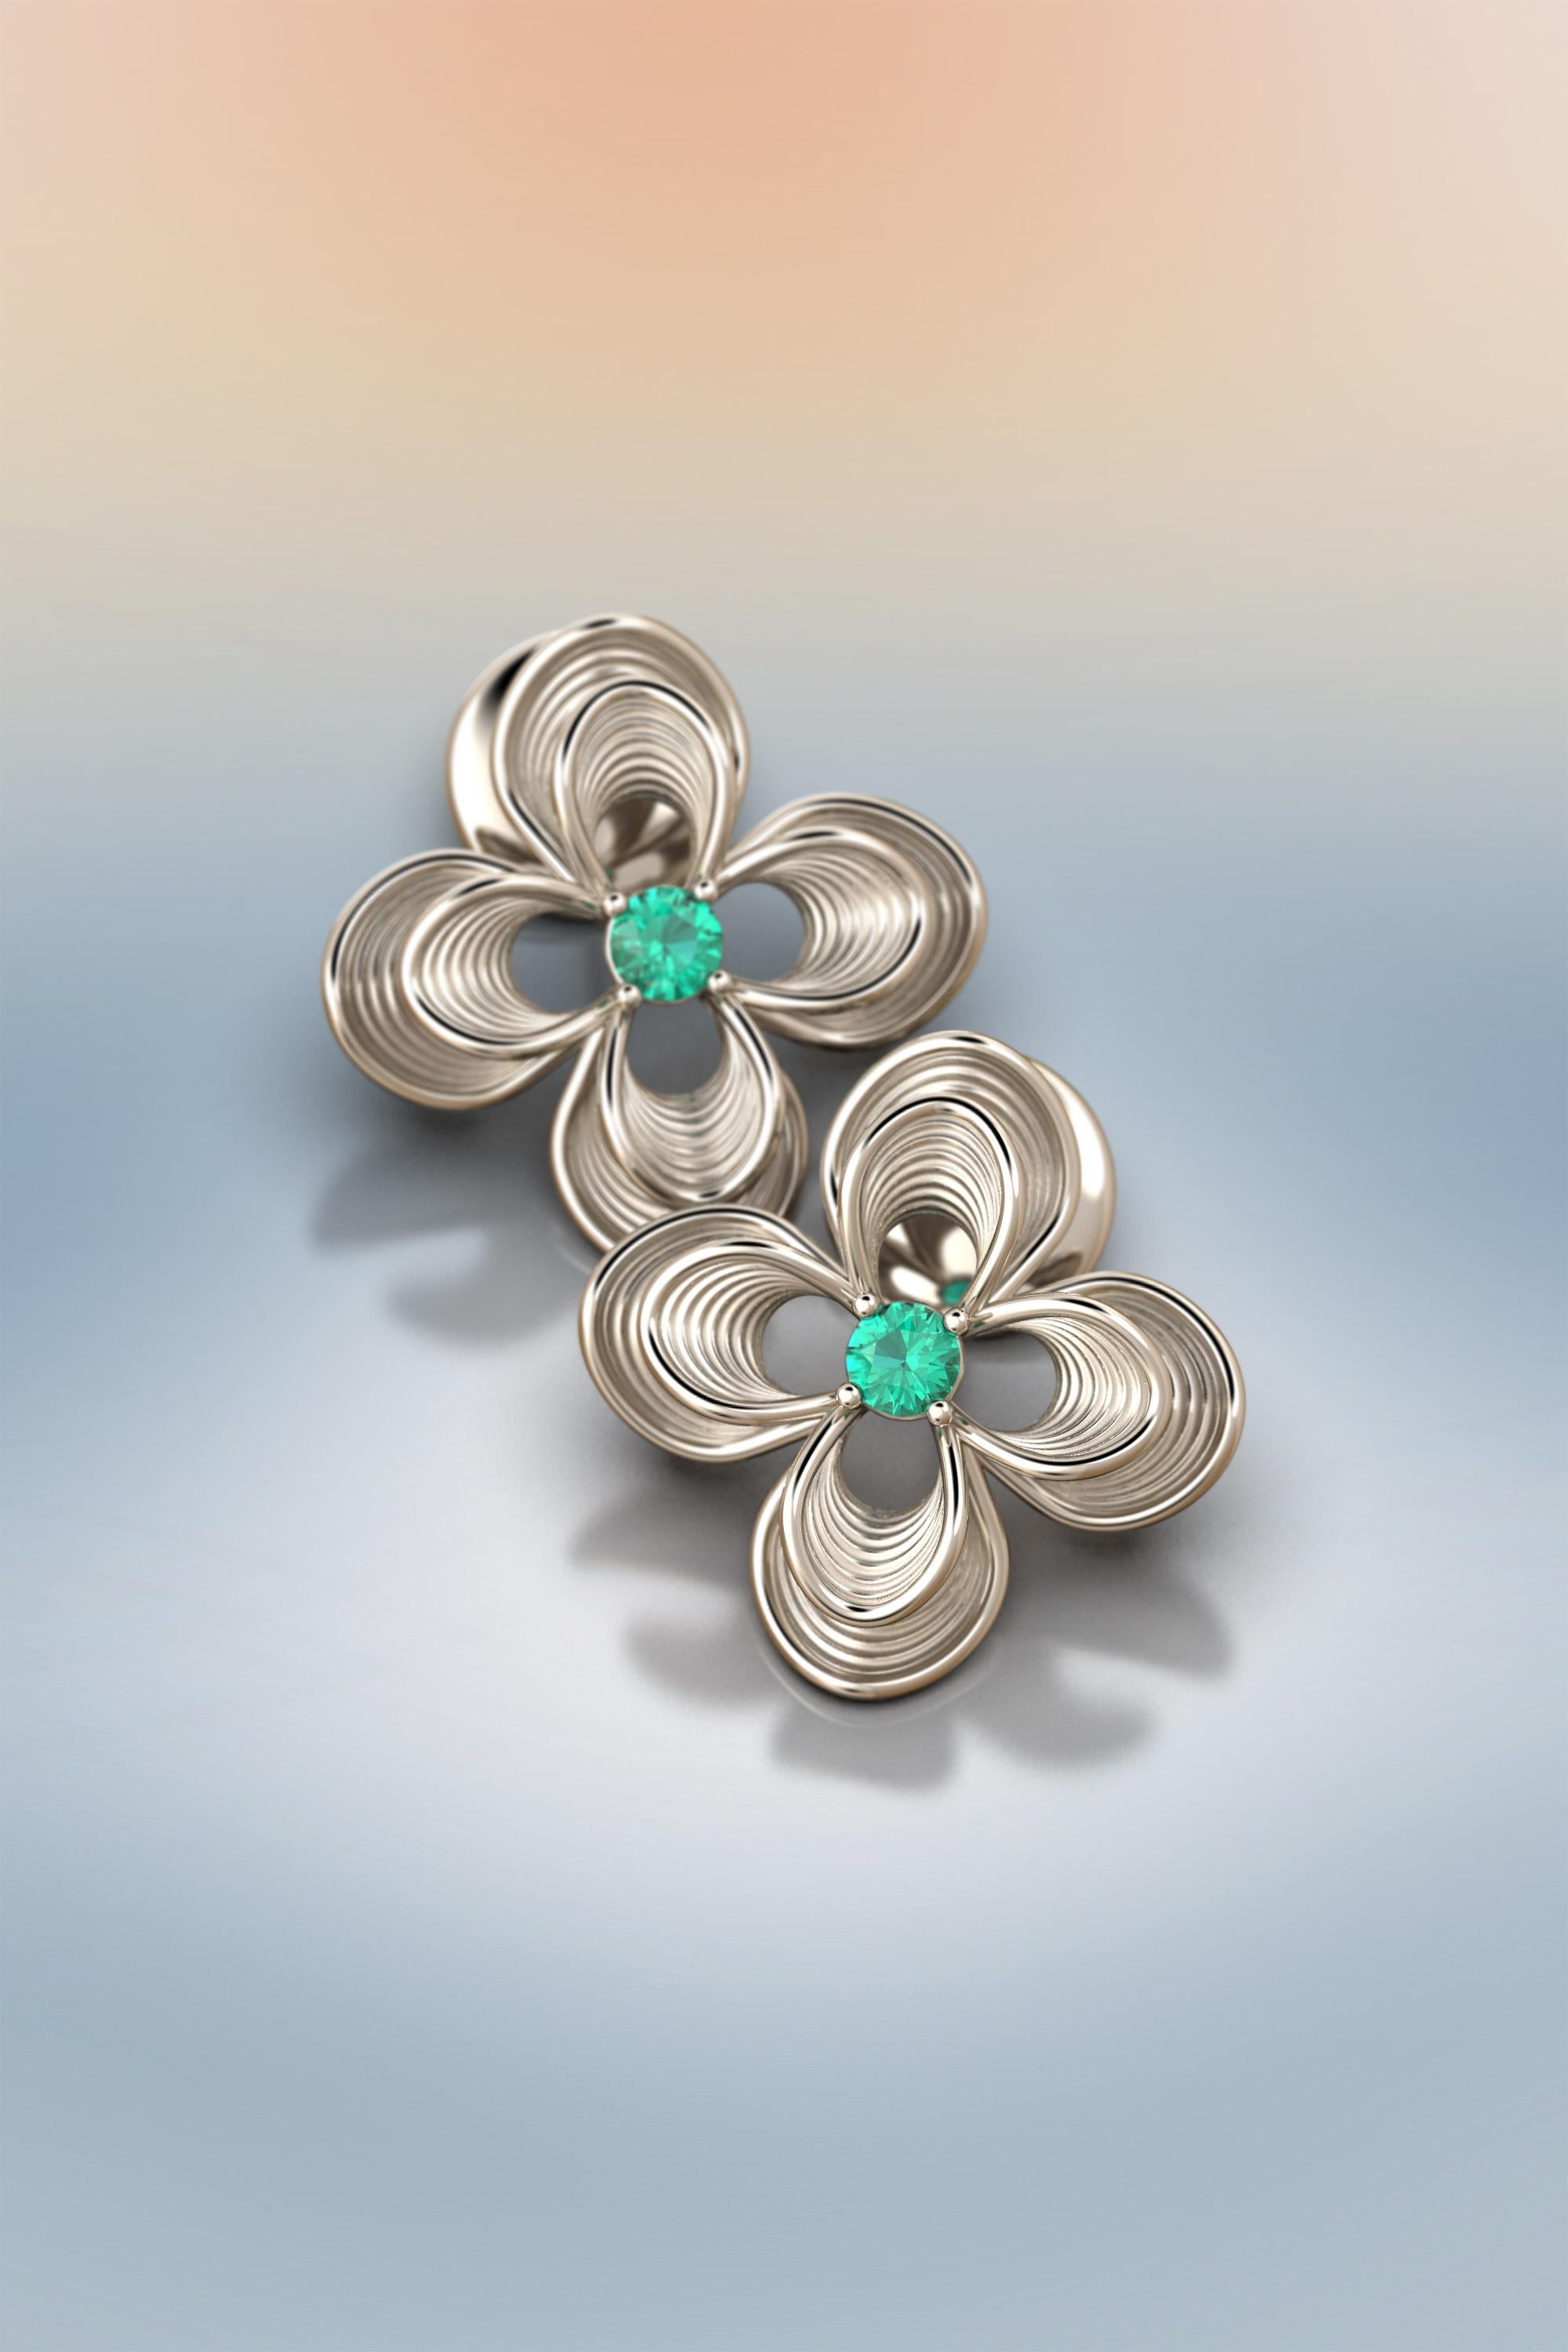 Emerald Stud Earrings in 18k Italian Gold by Oltremare Gioielli For Sale 2